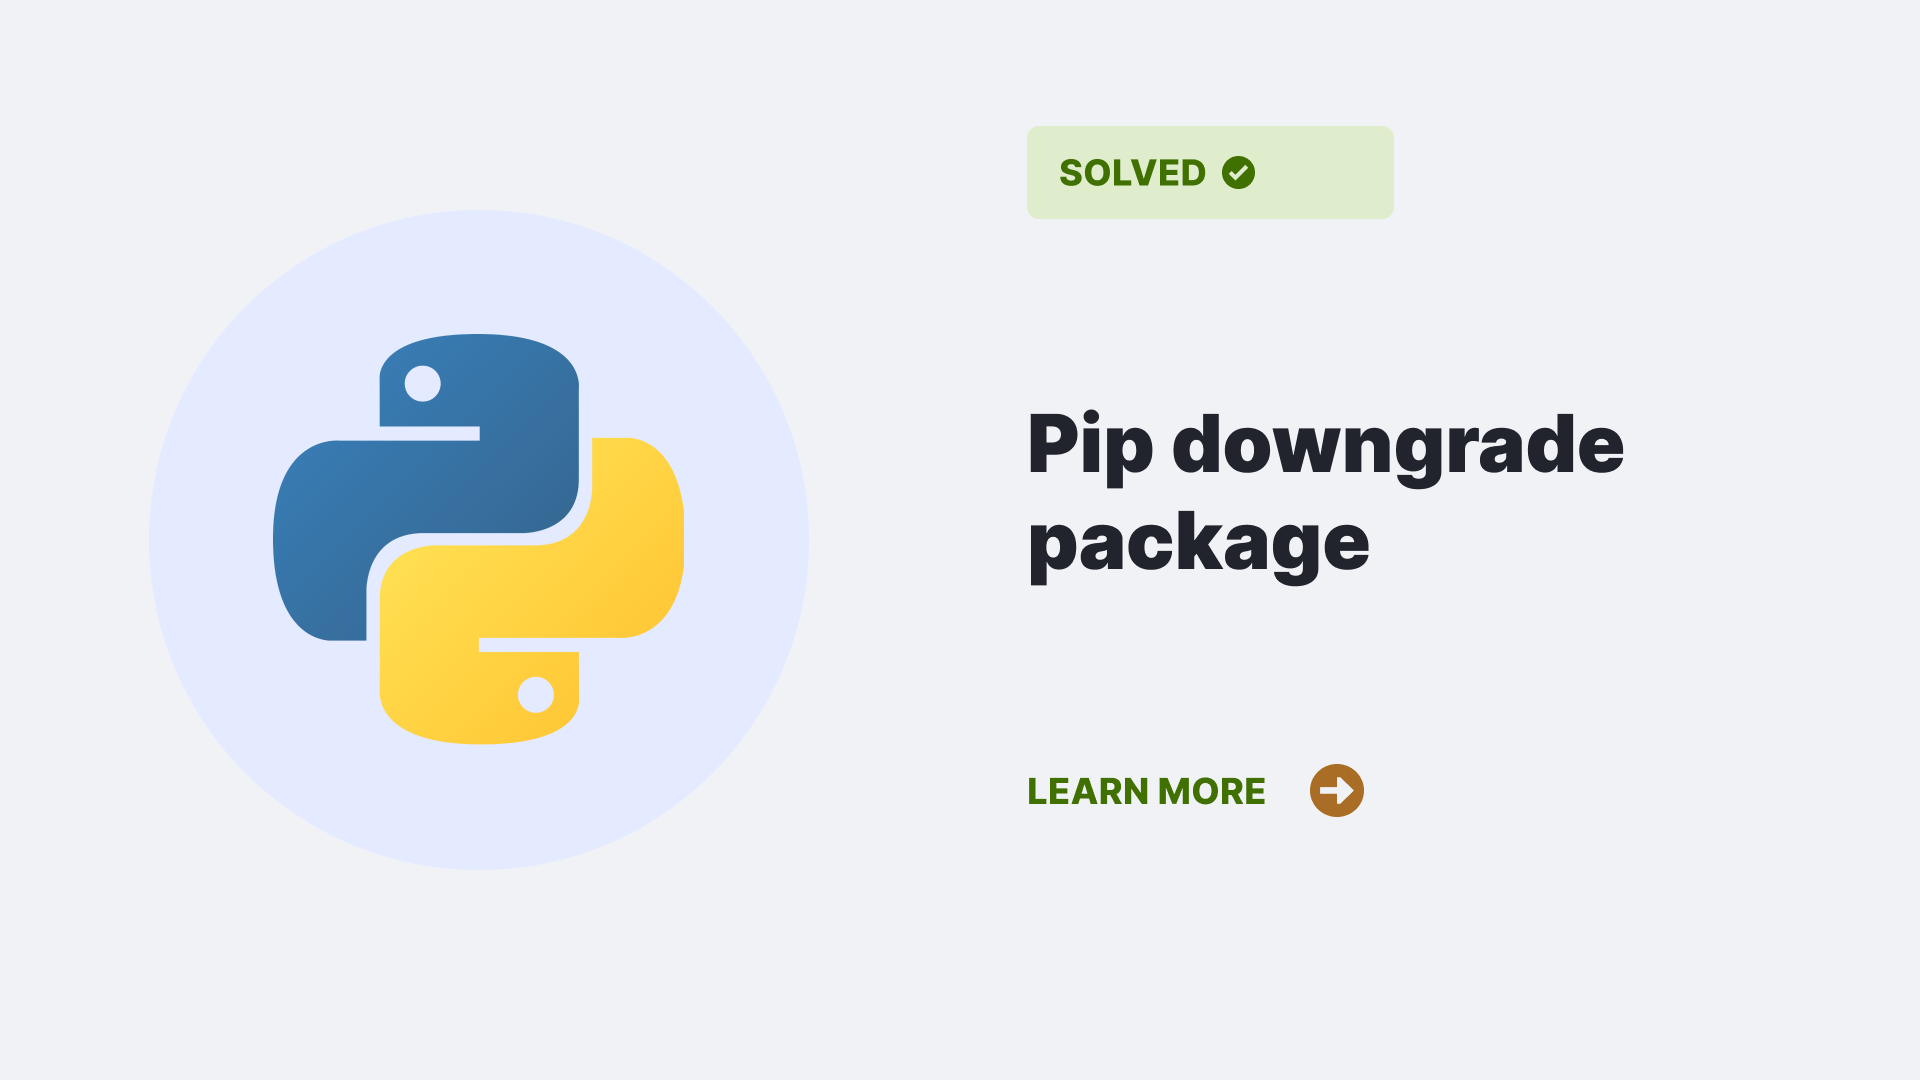 Pip downgrade package